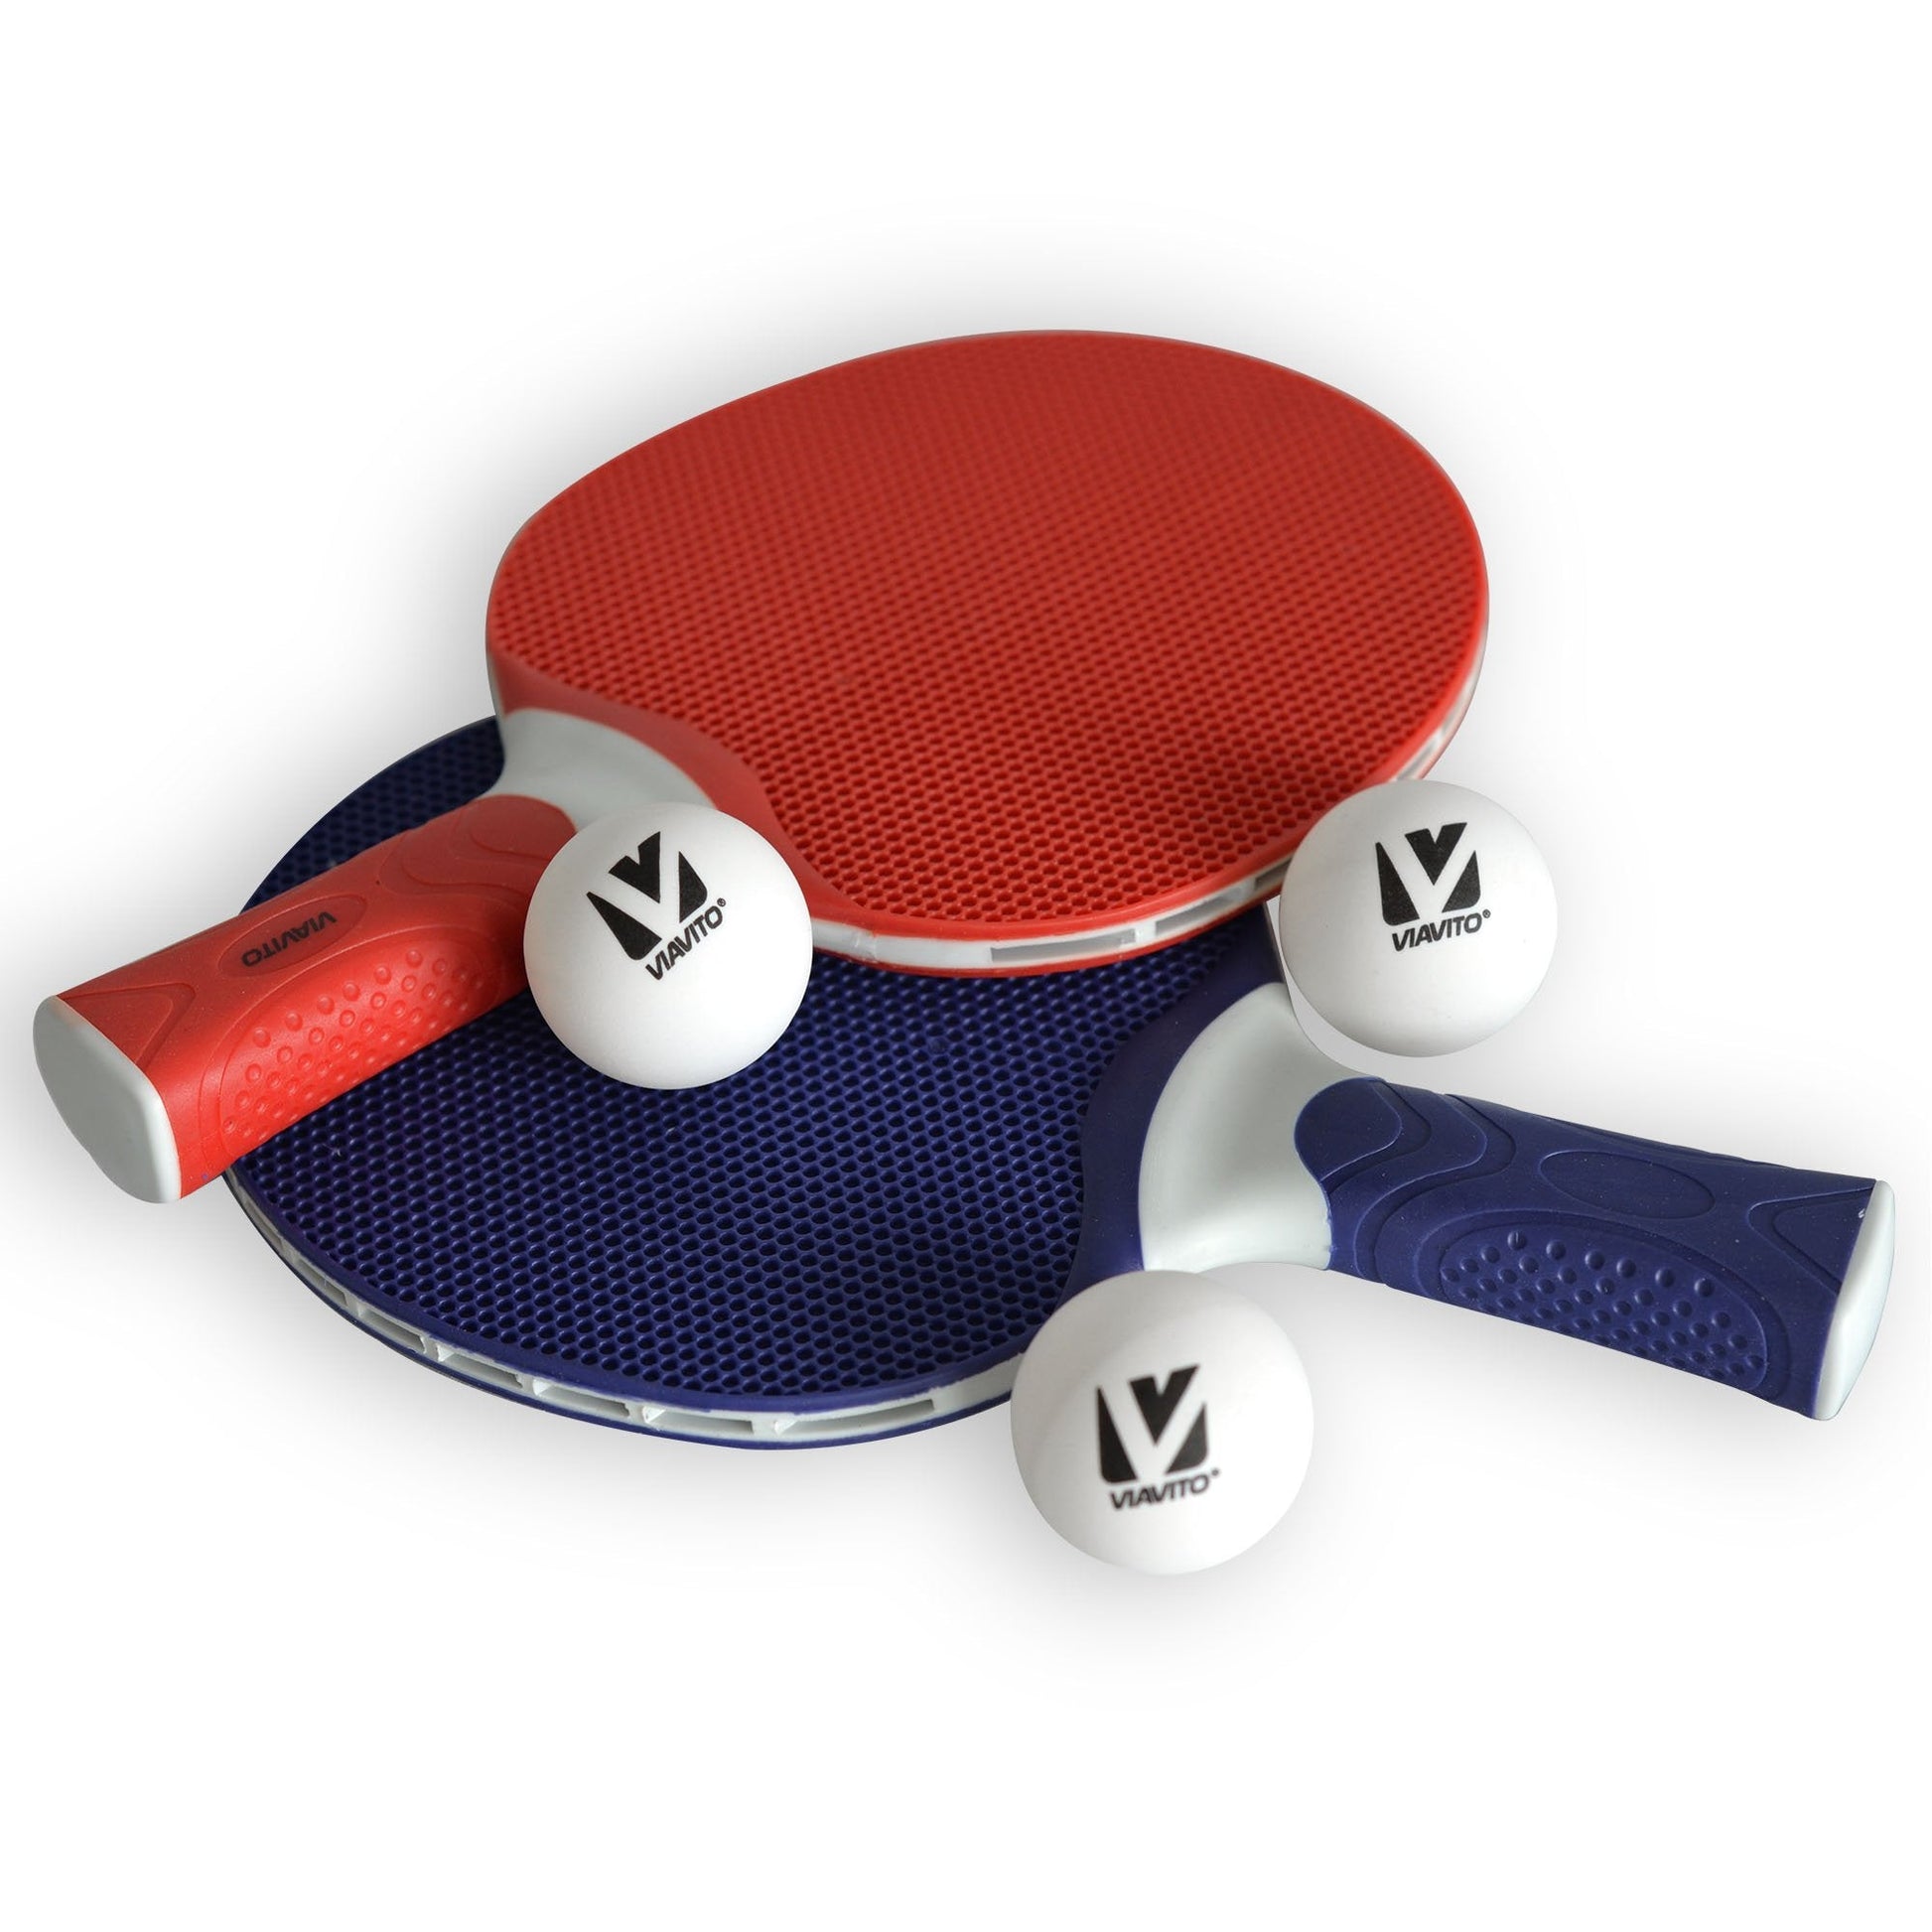 |Viavito Enduo 2 Player Table Tennis Set|